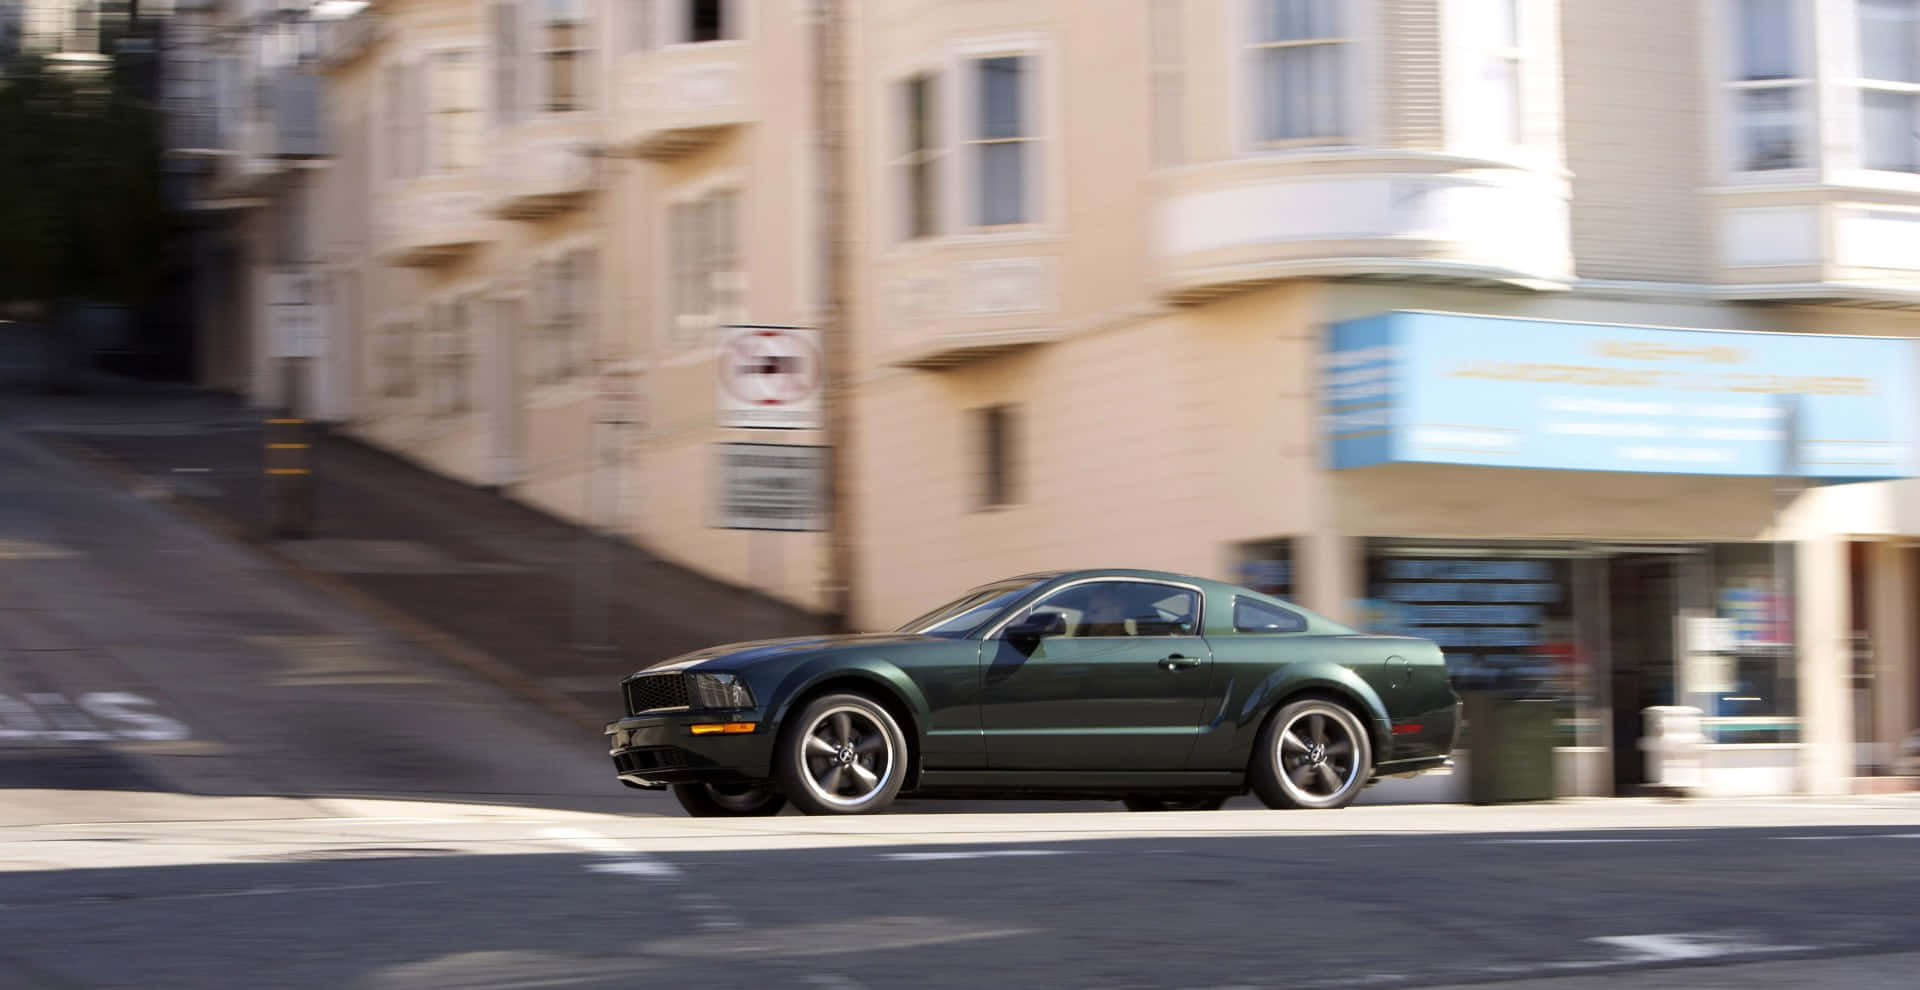 Caption: Ford Mustang Bullitt Cruising the Streets Wallpaper